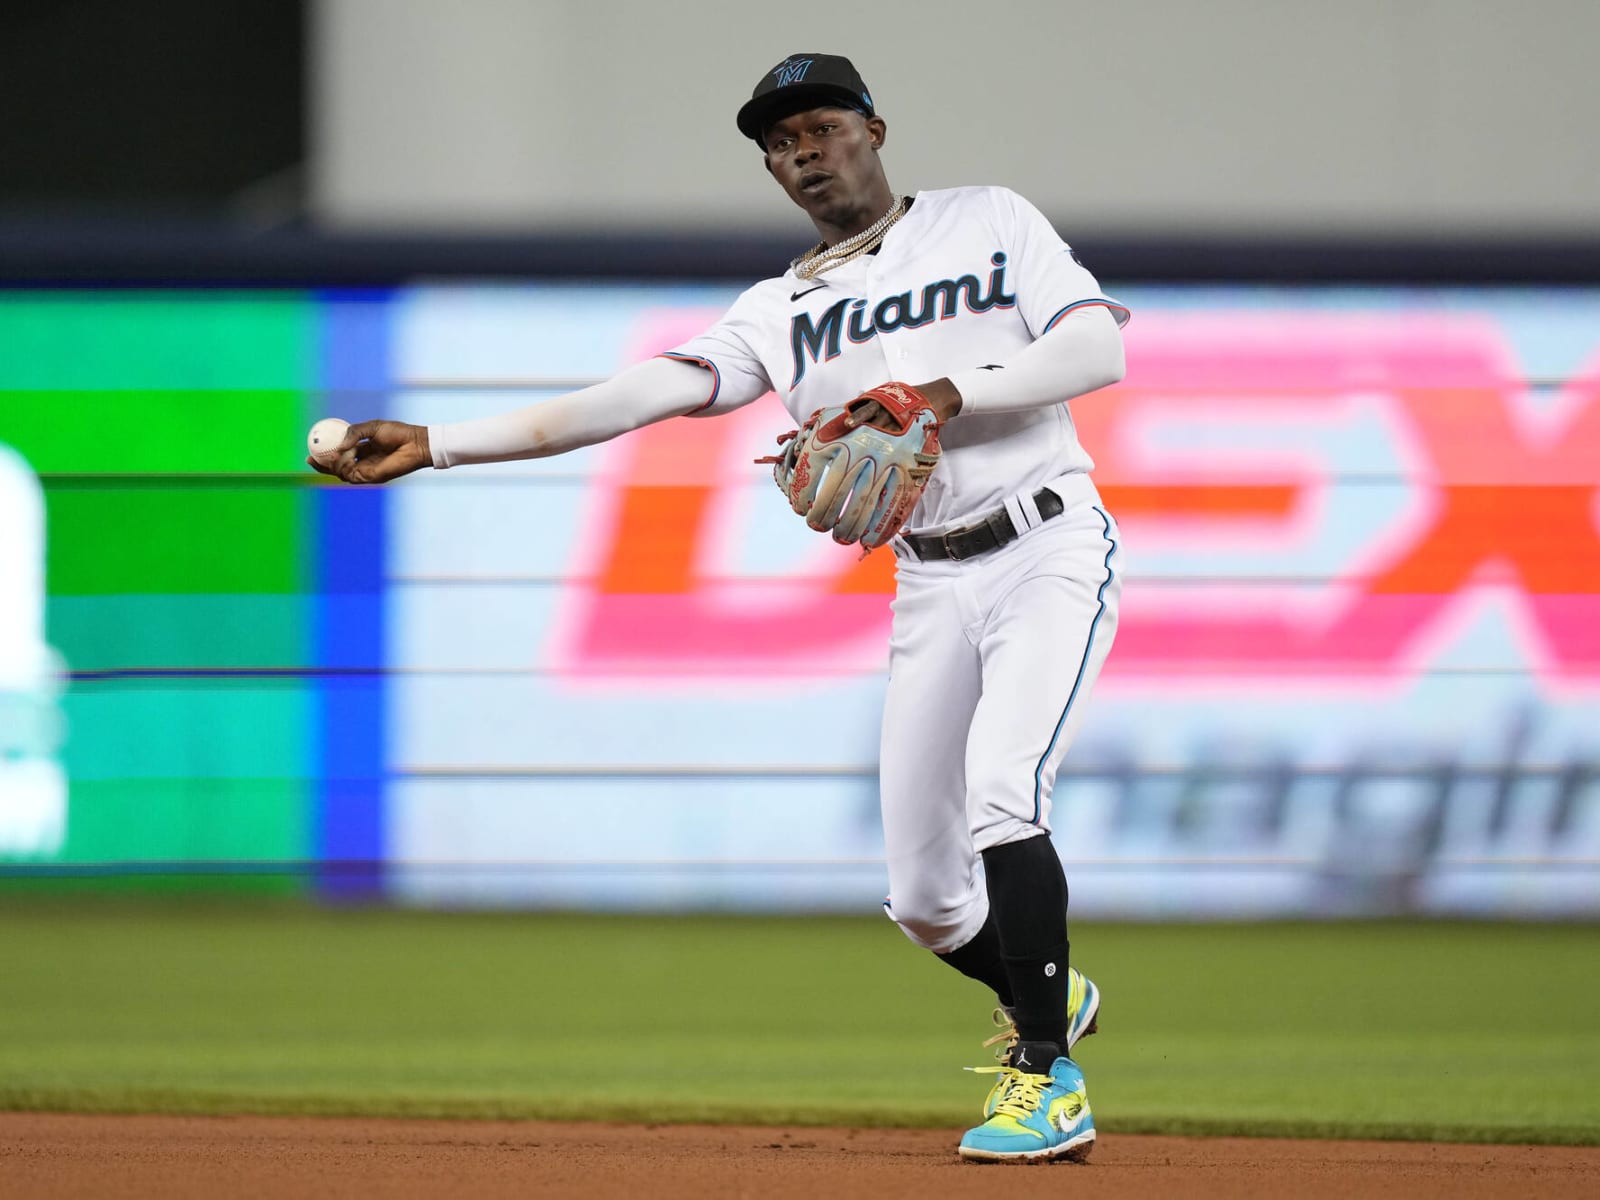 Jazz Chisholm (Miami Marlins baseball player) wore a pair of Black